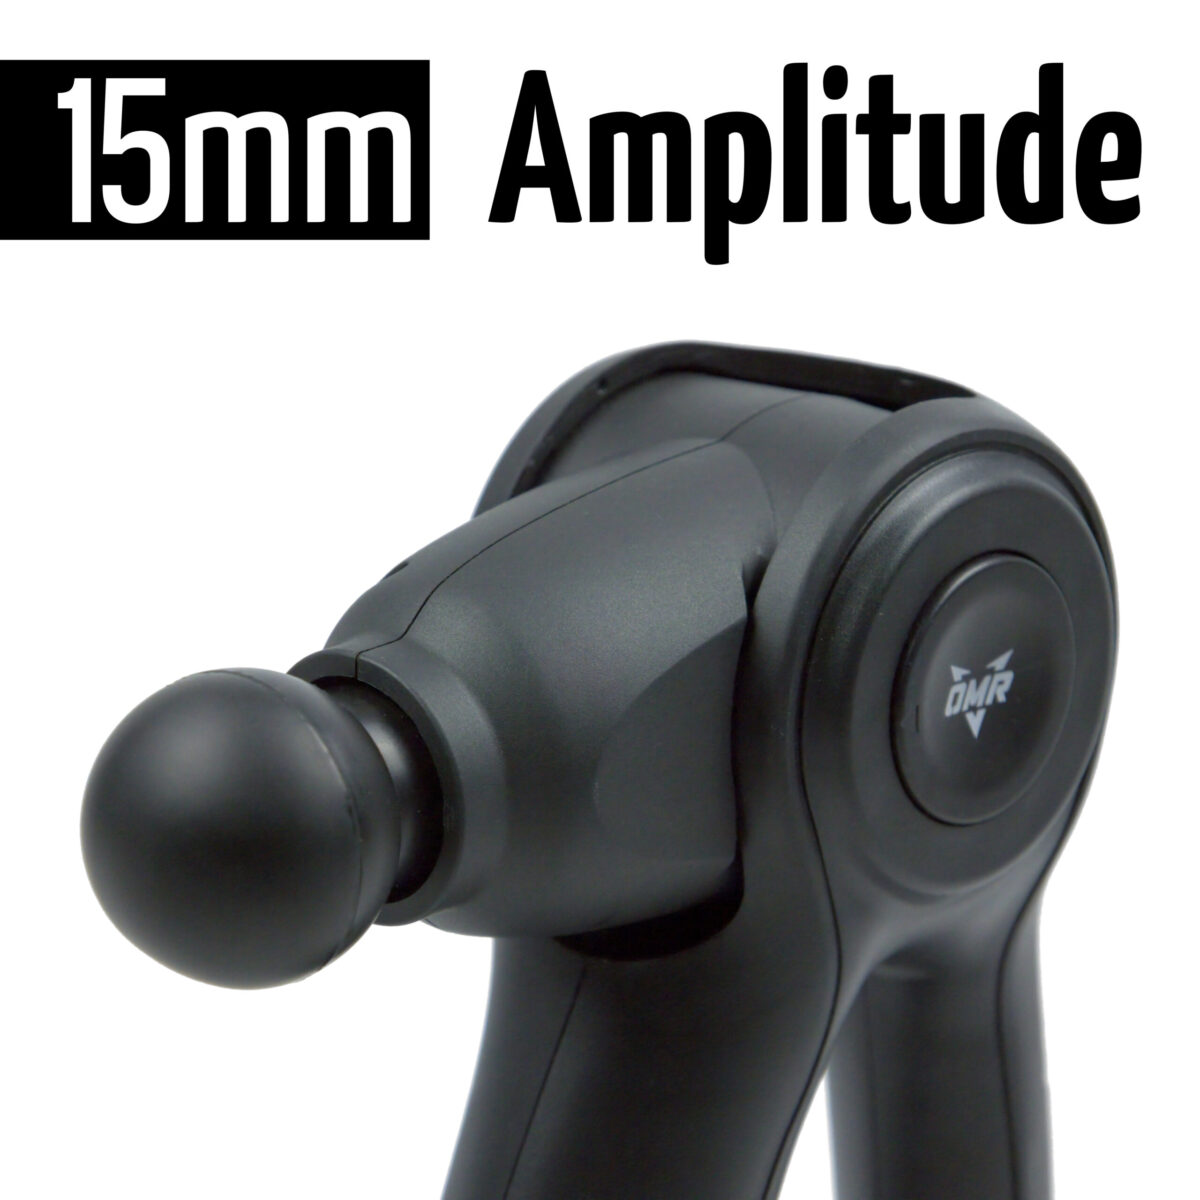 15mm Amplitude Massage Gun